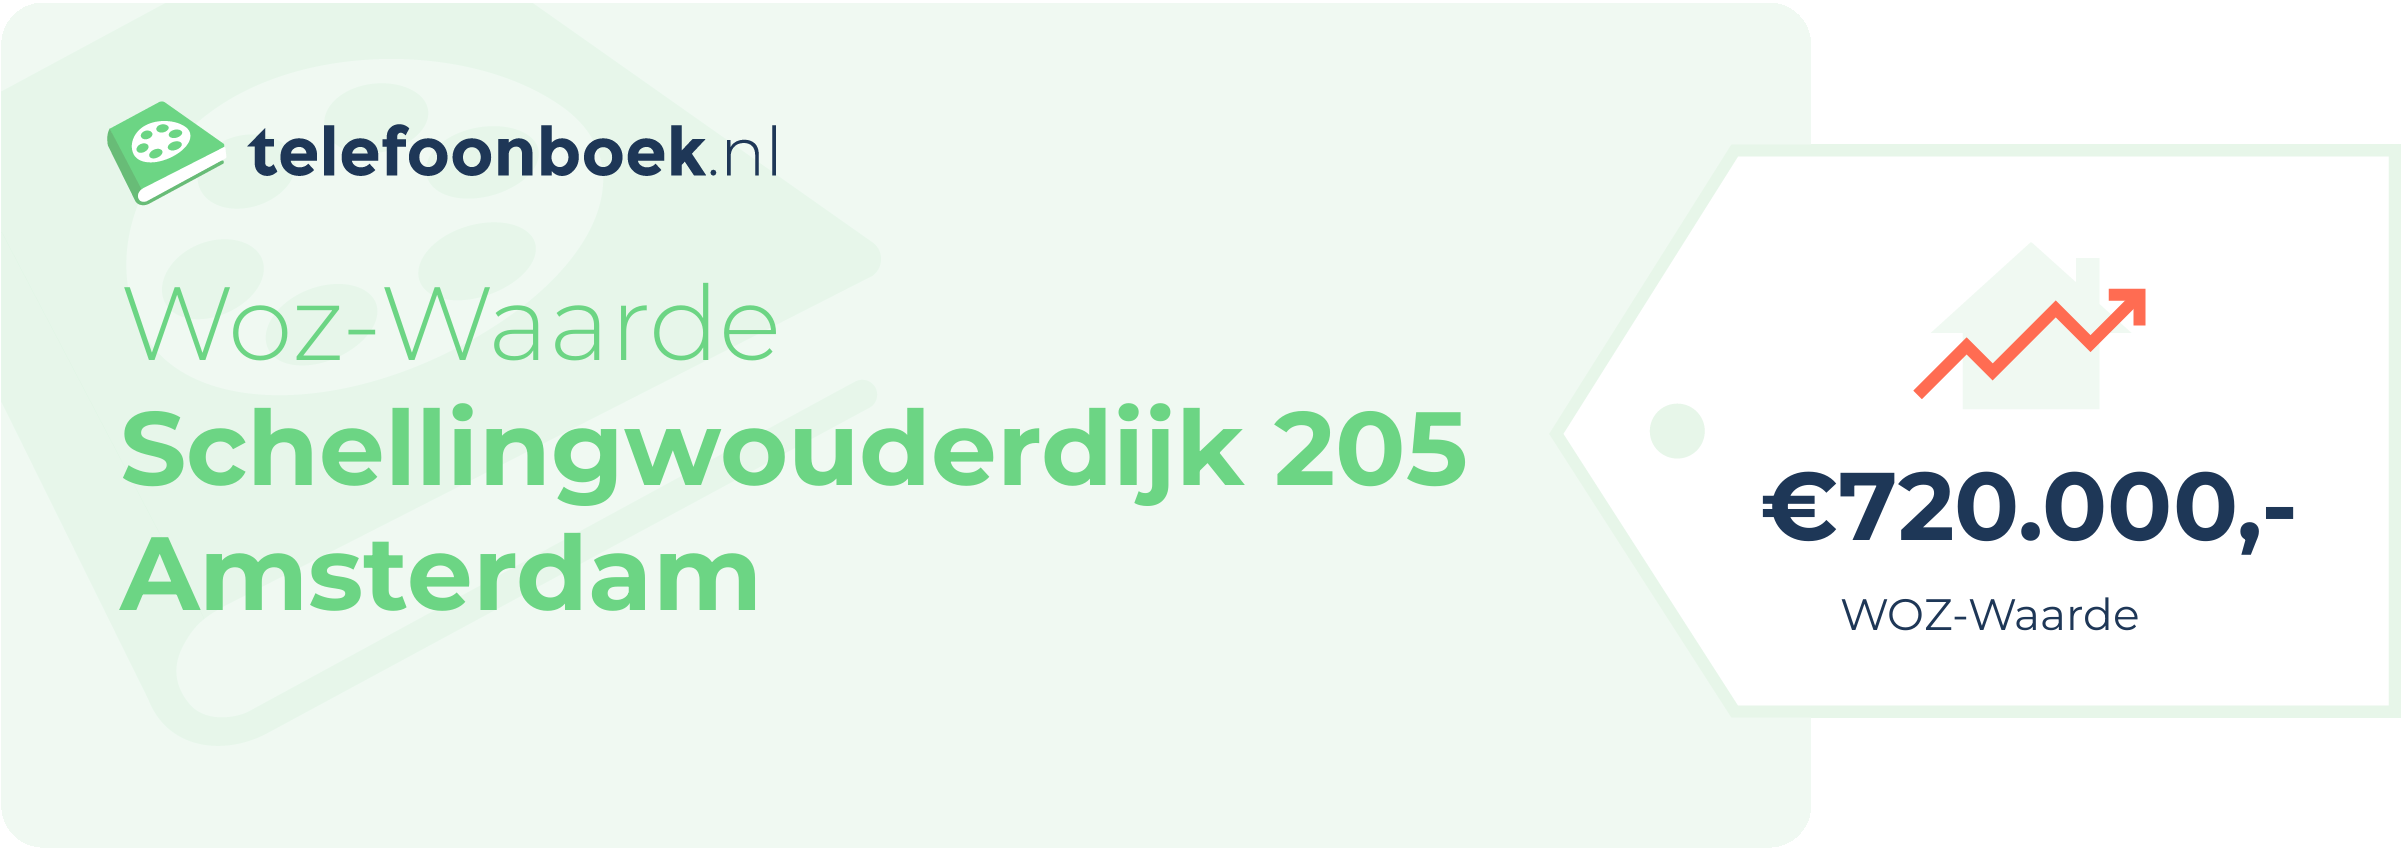 WOZ-waarde Schellingwouderdijk 205 Amsterdam